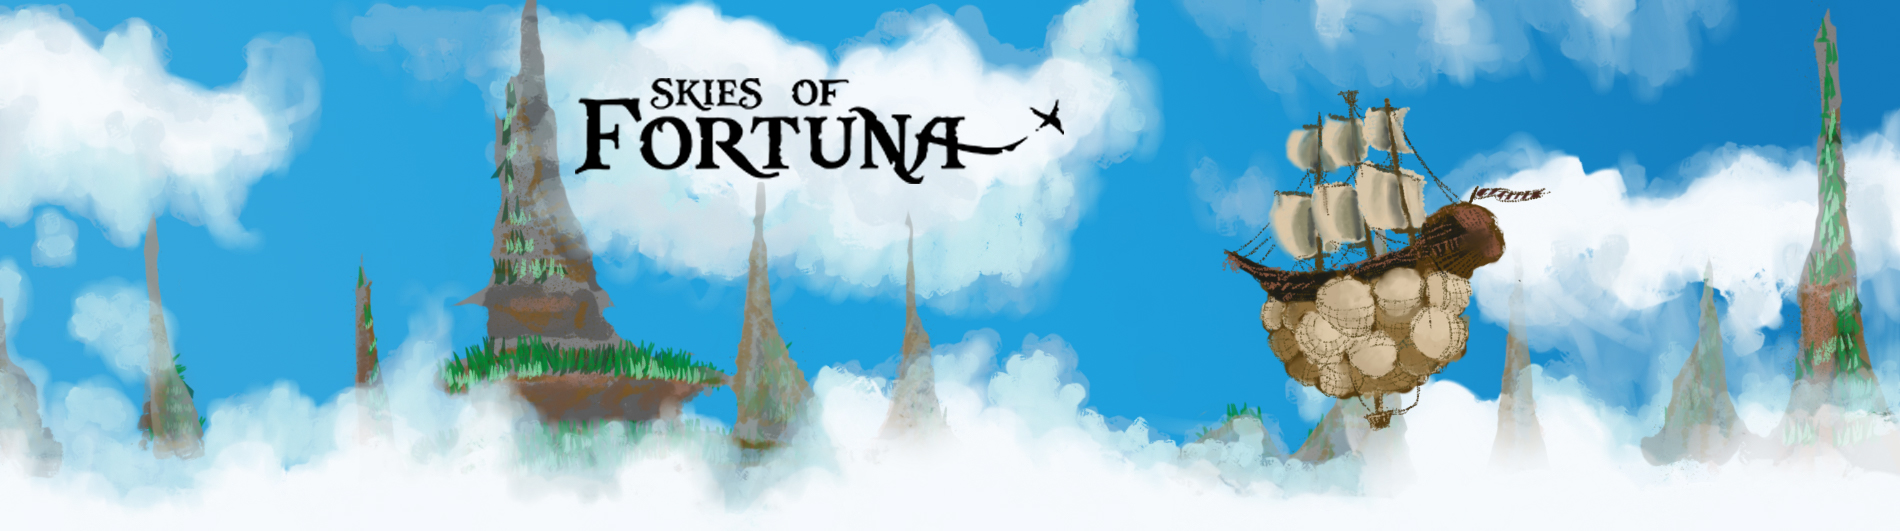 Skies of Fortuna